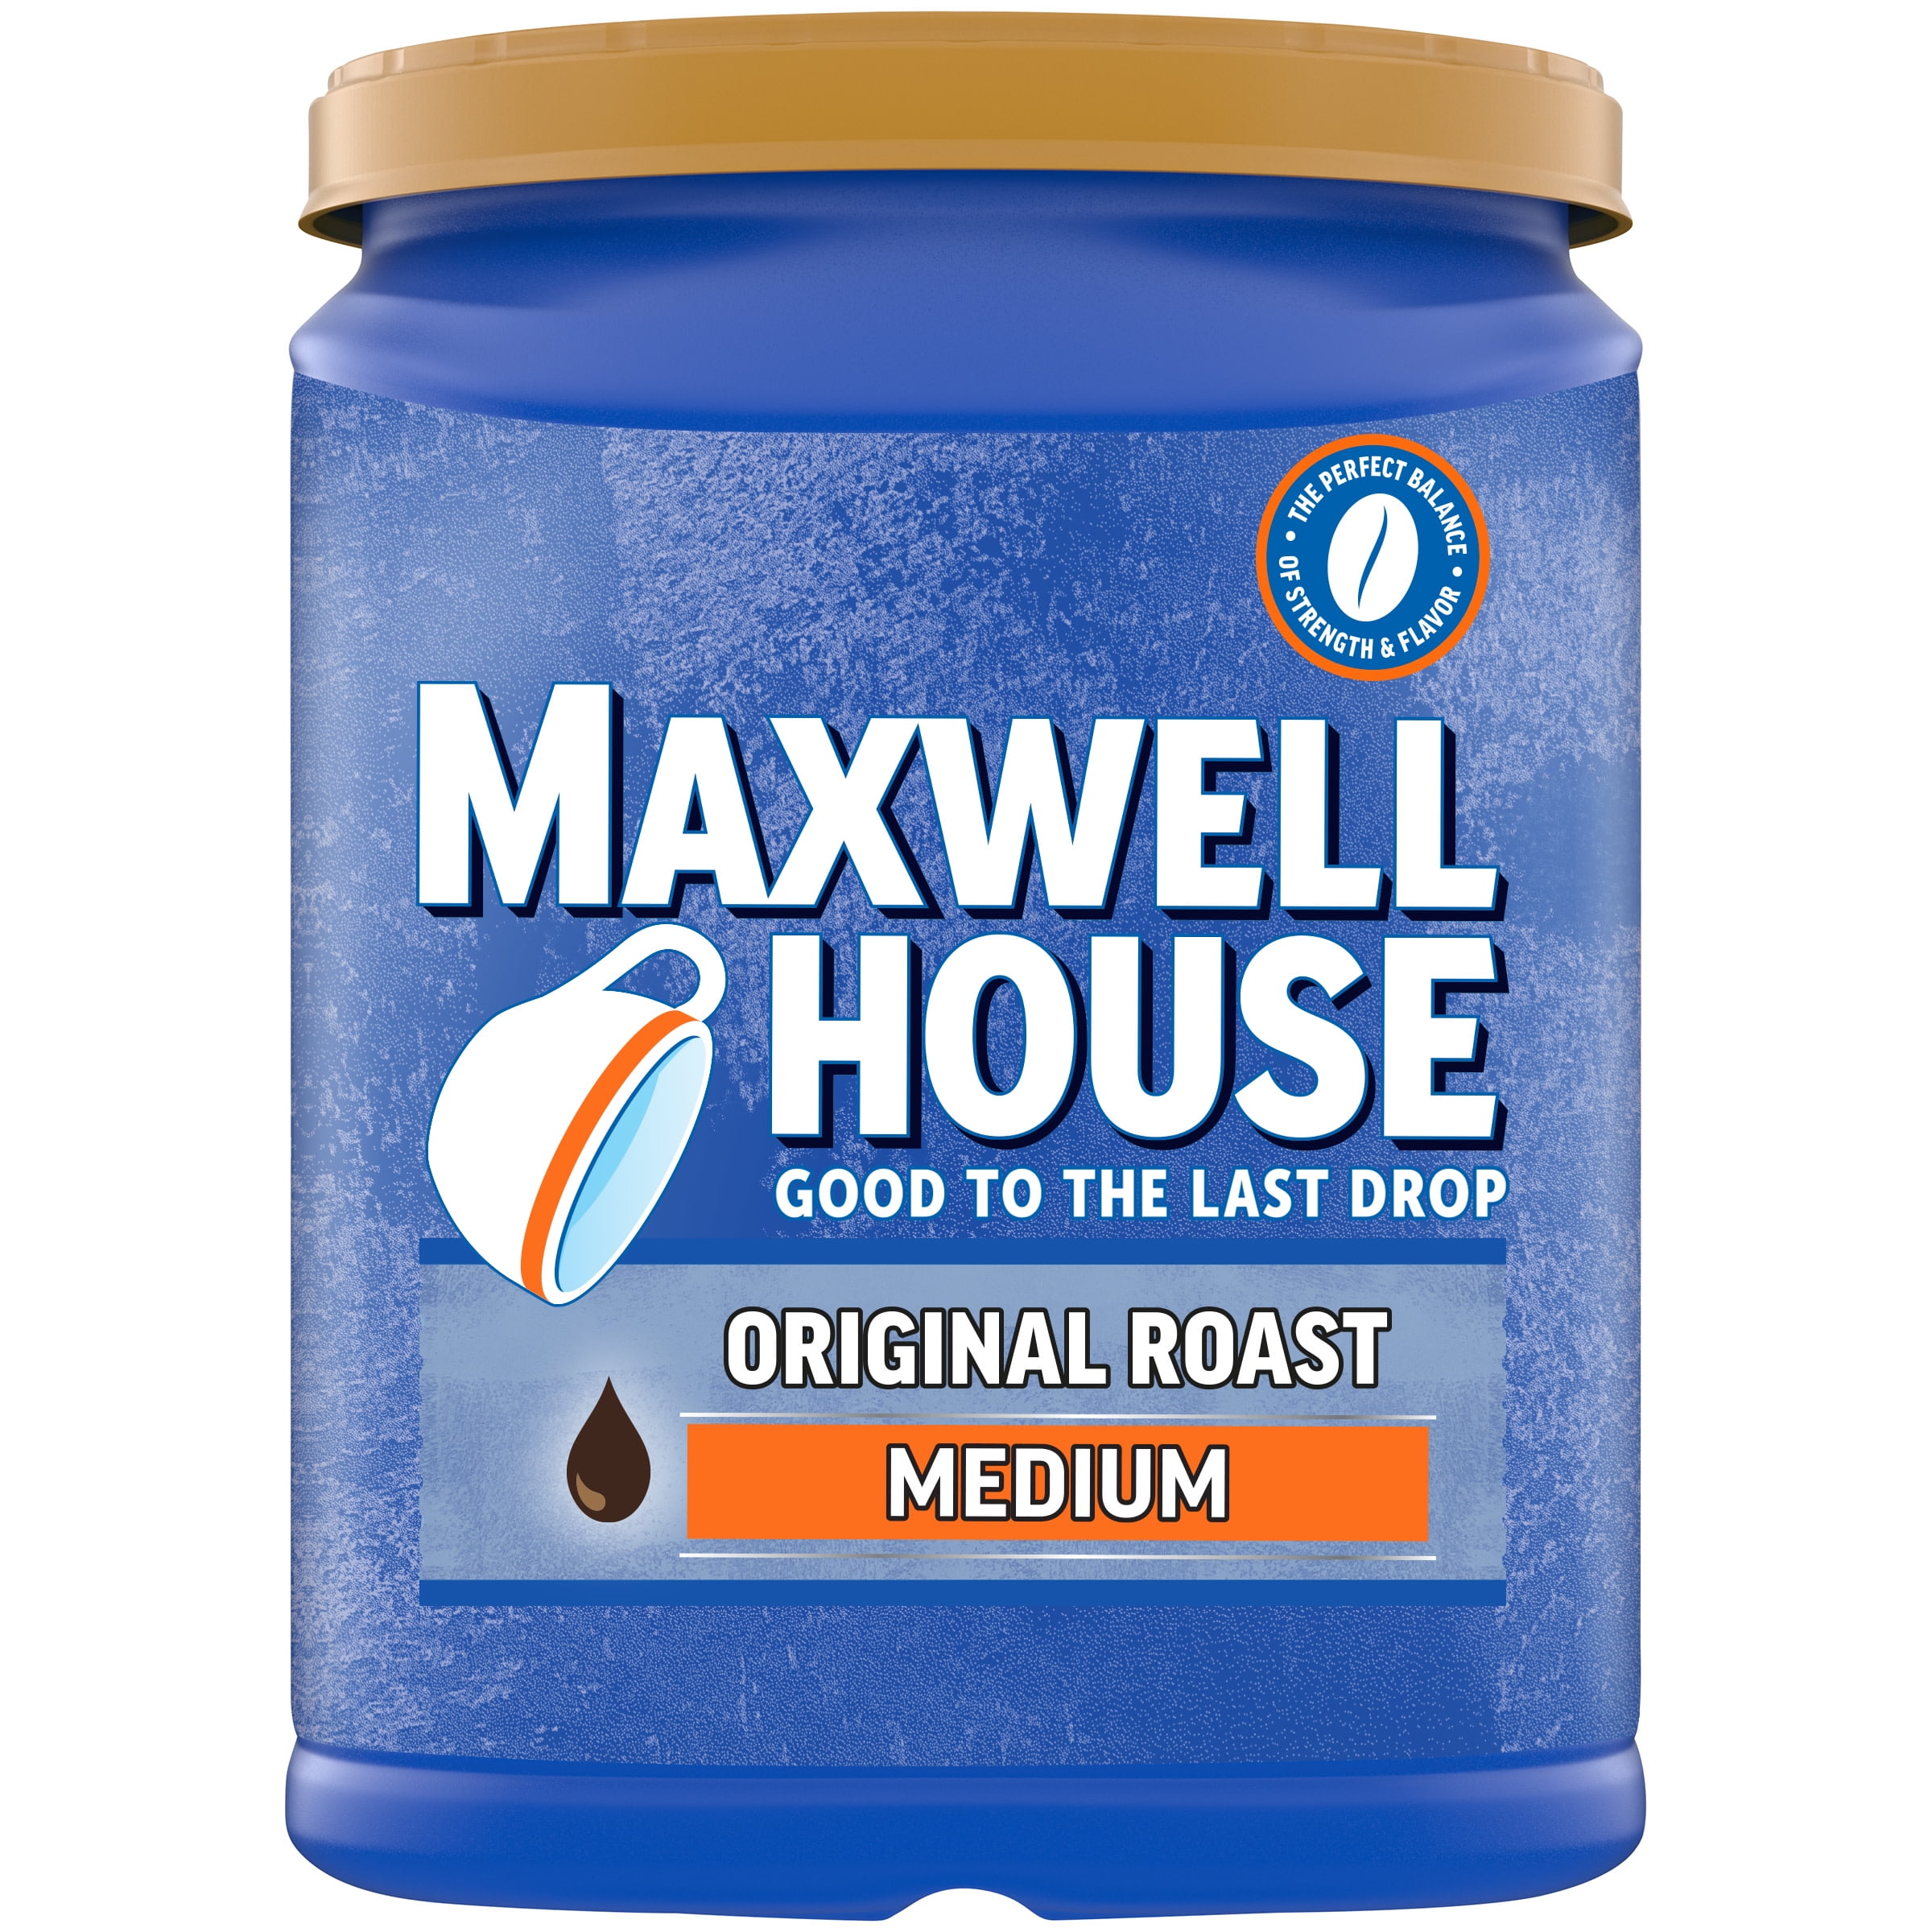 Maxwell House Original Roast Ground Coffee, 42.5 oz. Canister